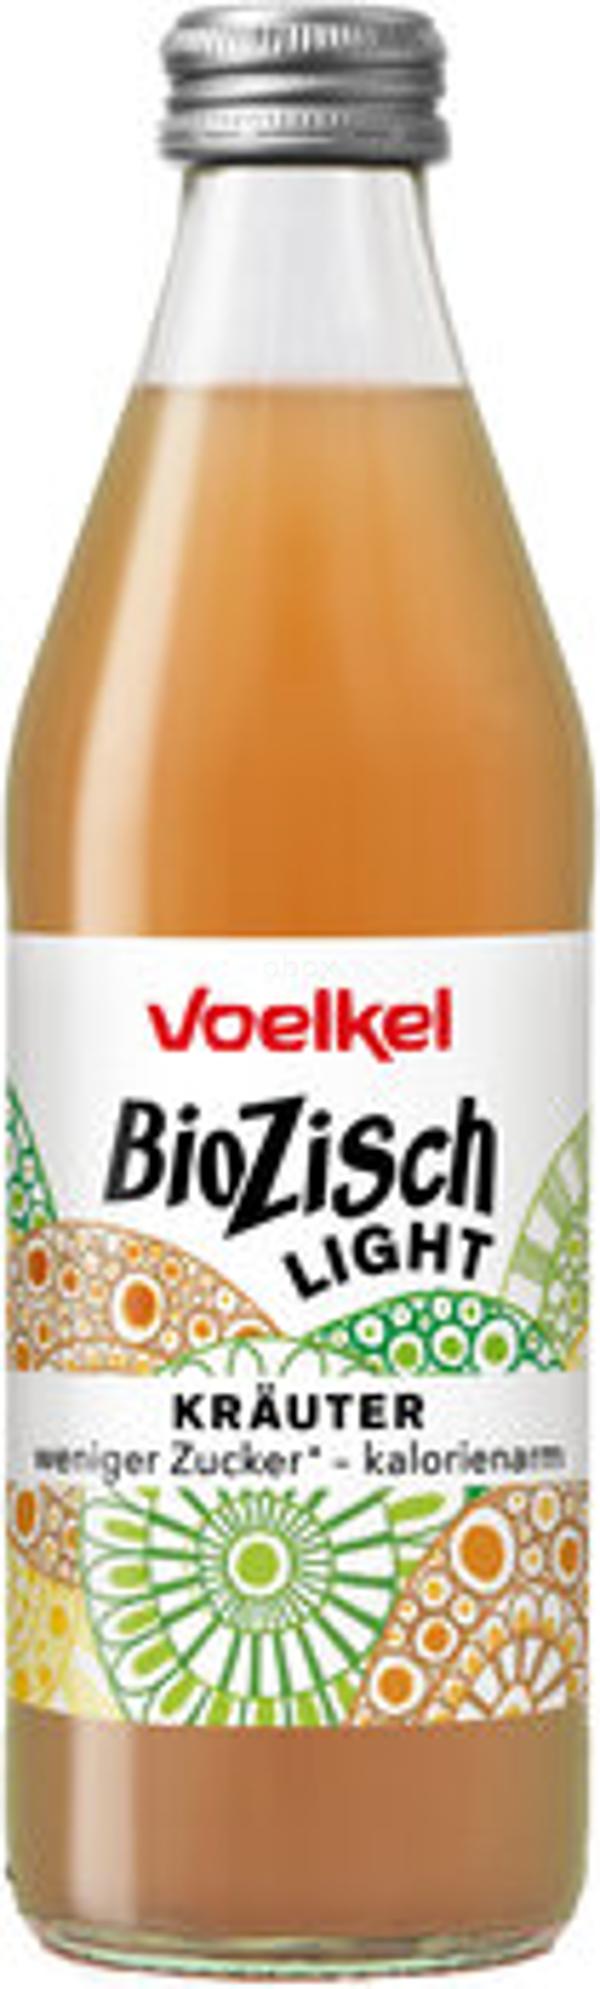 Produktfoto zu BioZisch Light Kräuter, 0,33 l